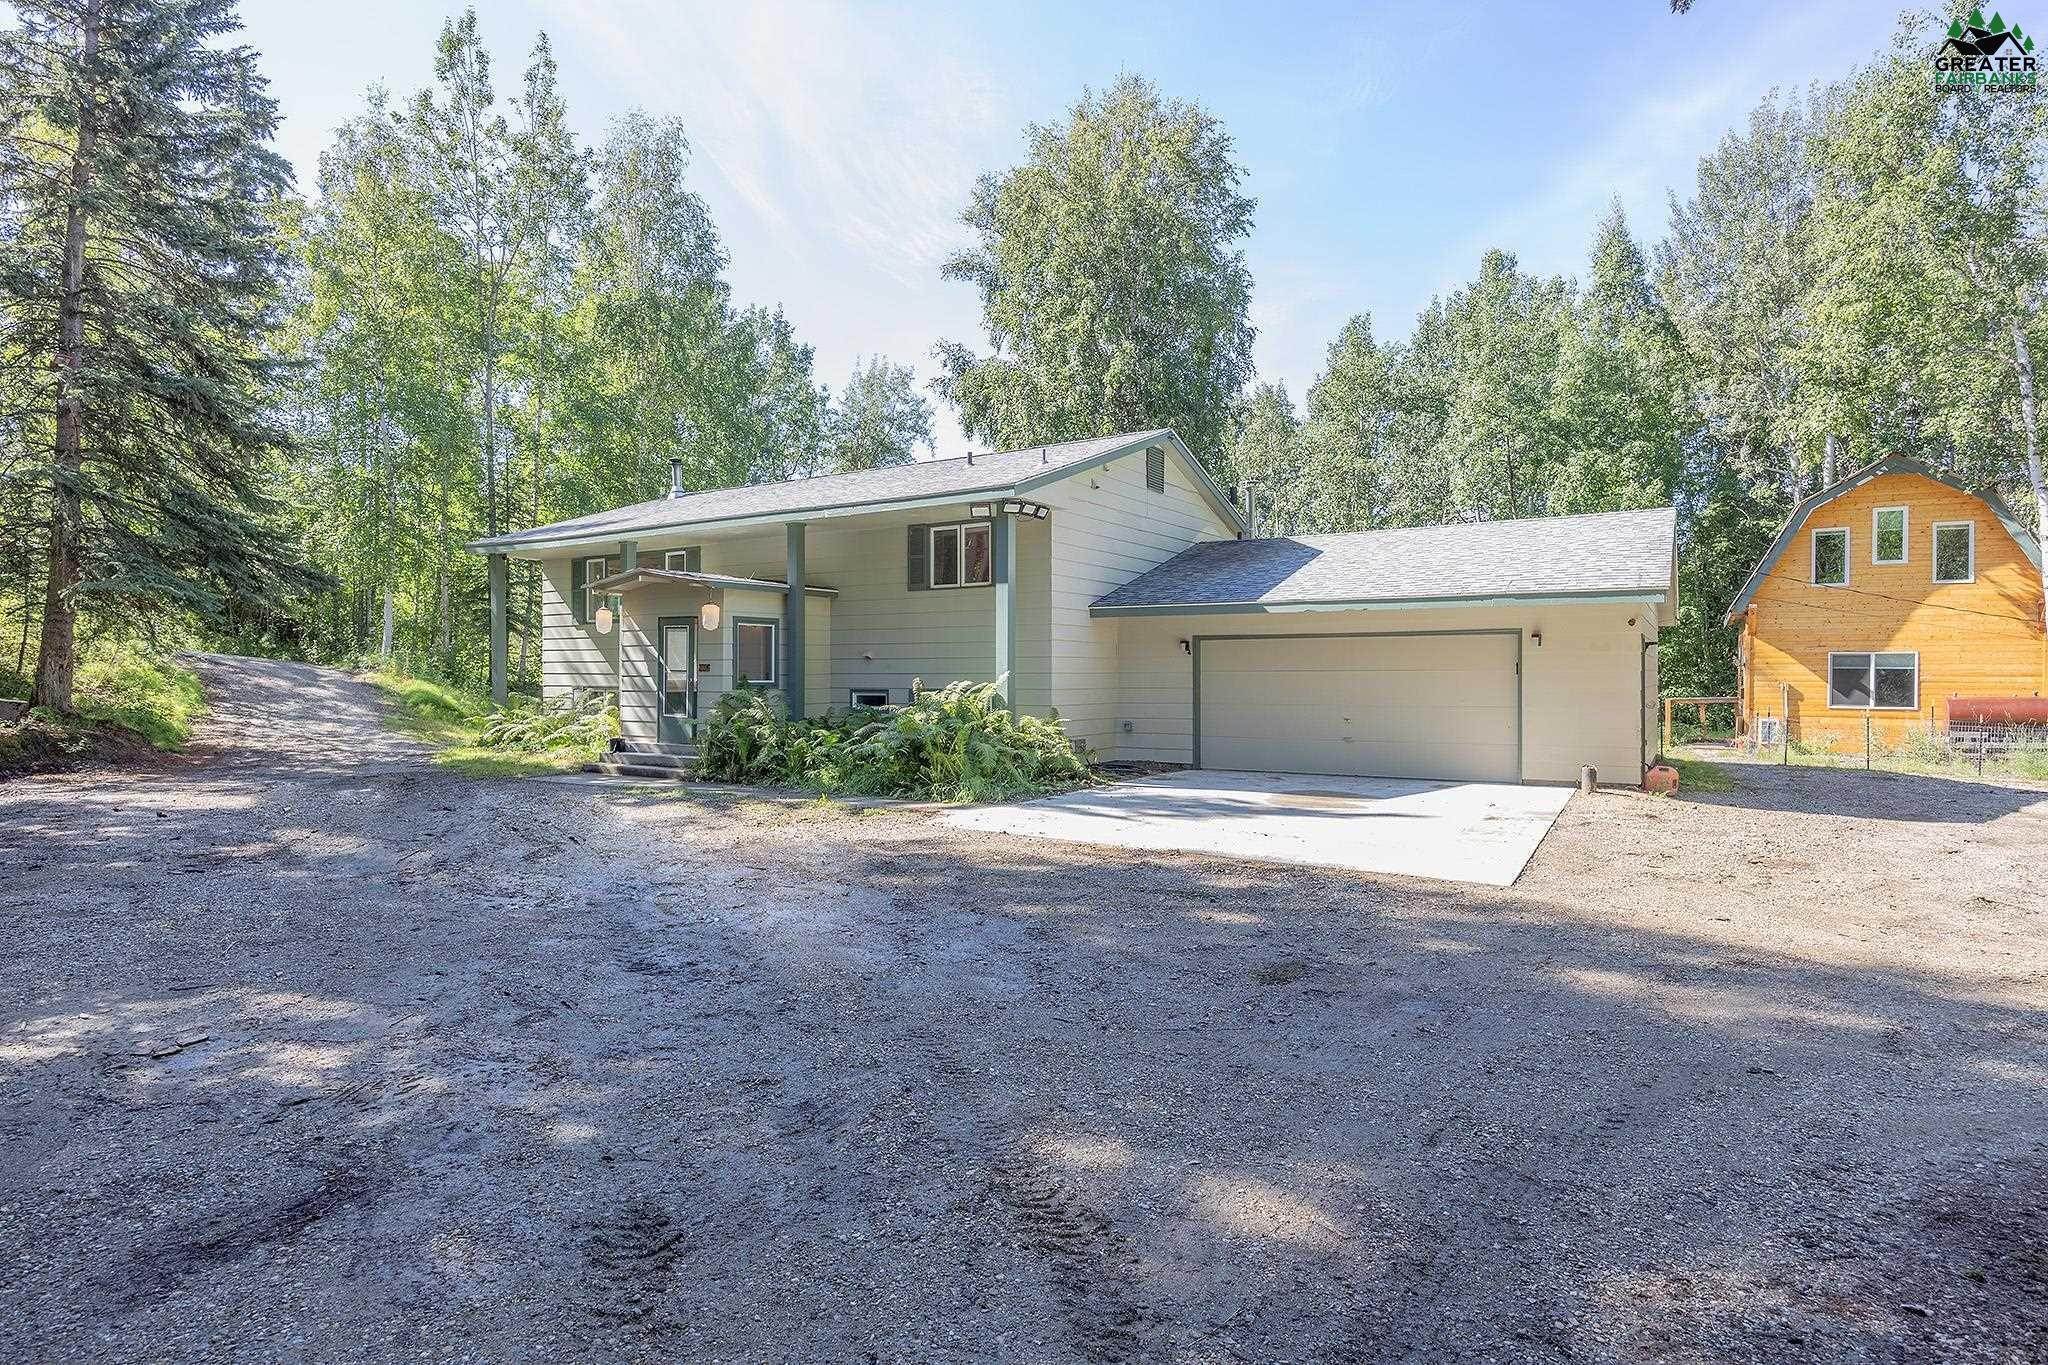 Property for Sale at 119 GRUENING WAY Fairbanks, Alaska 99712 United States